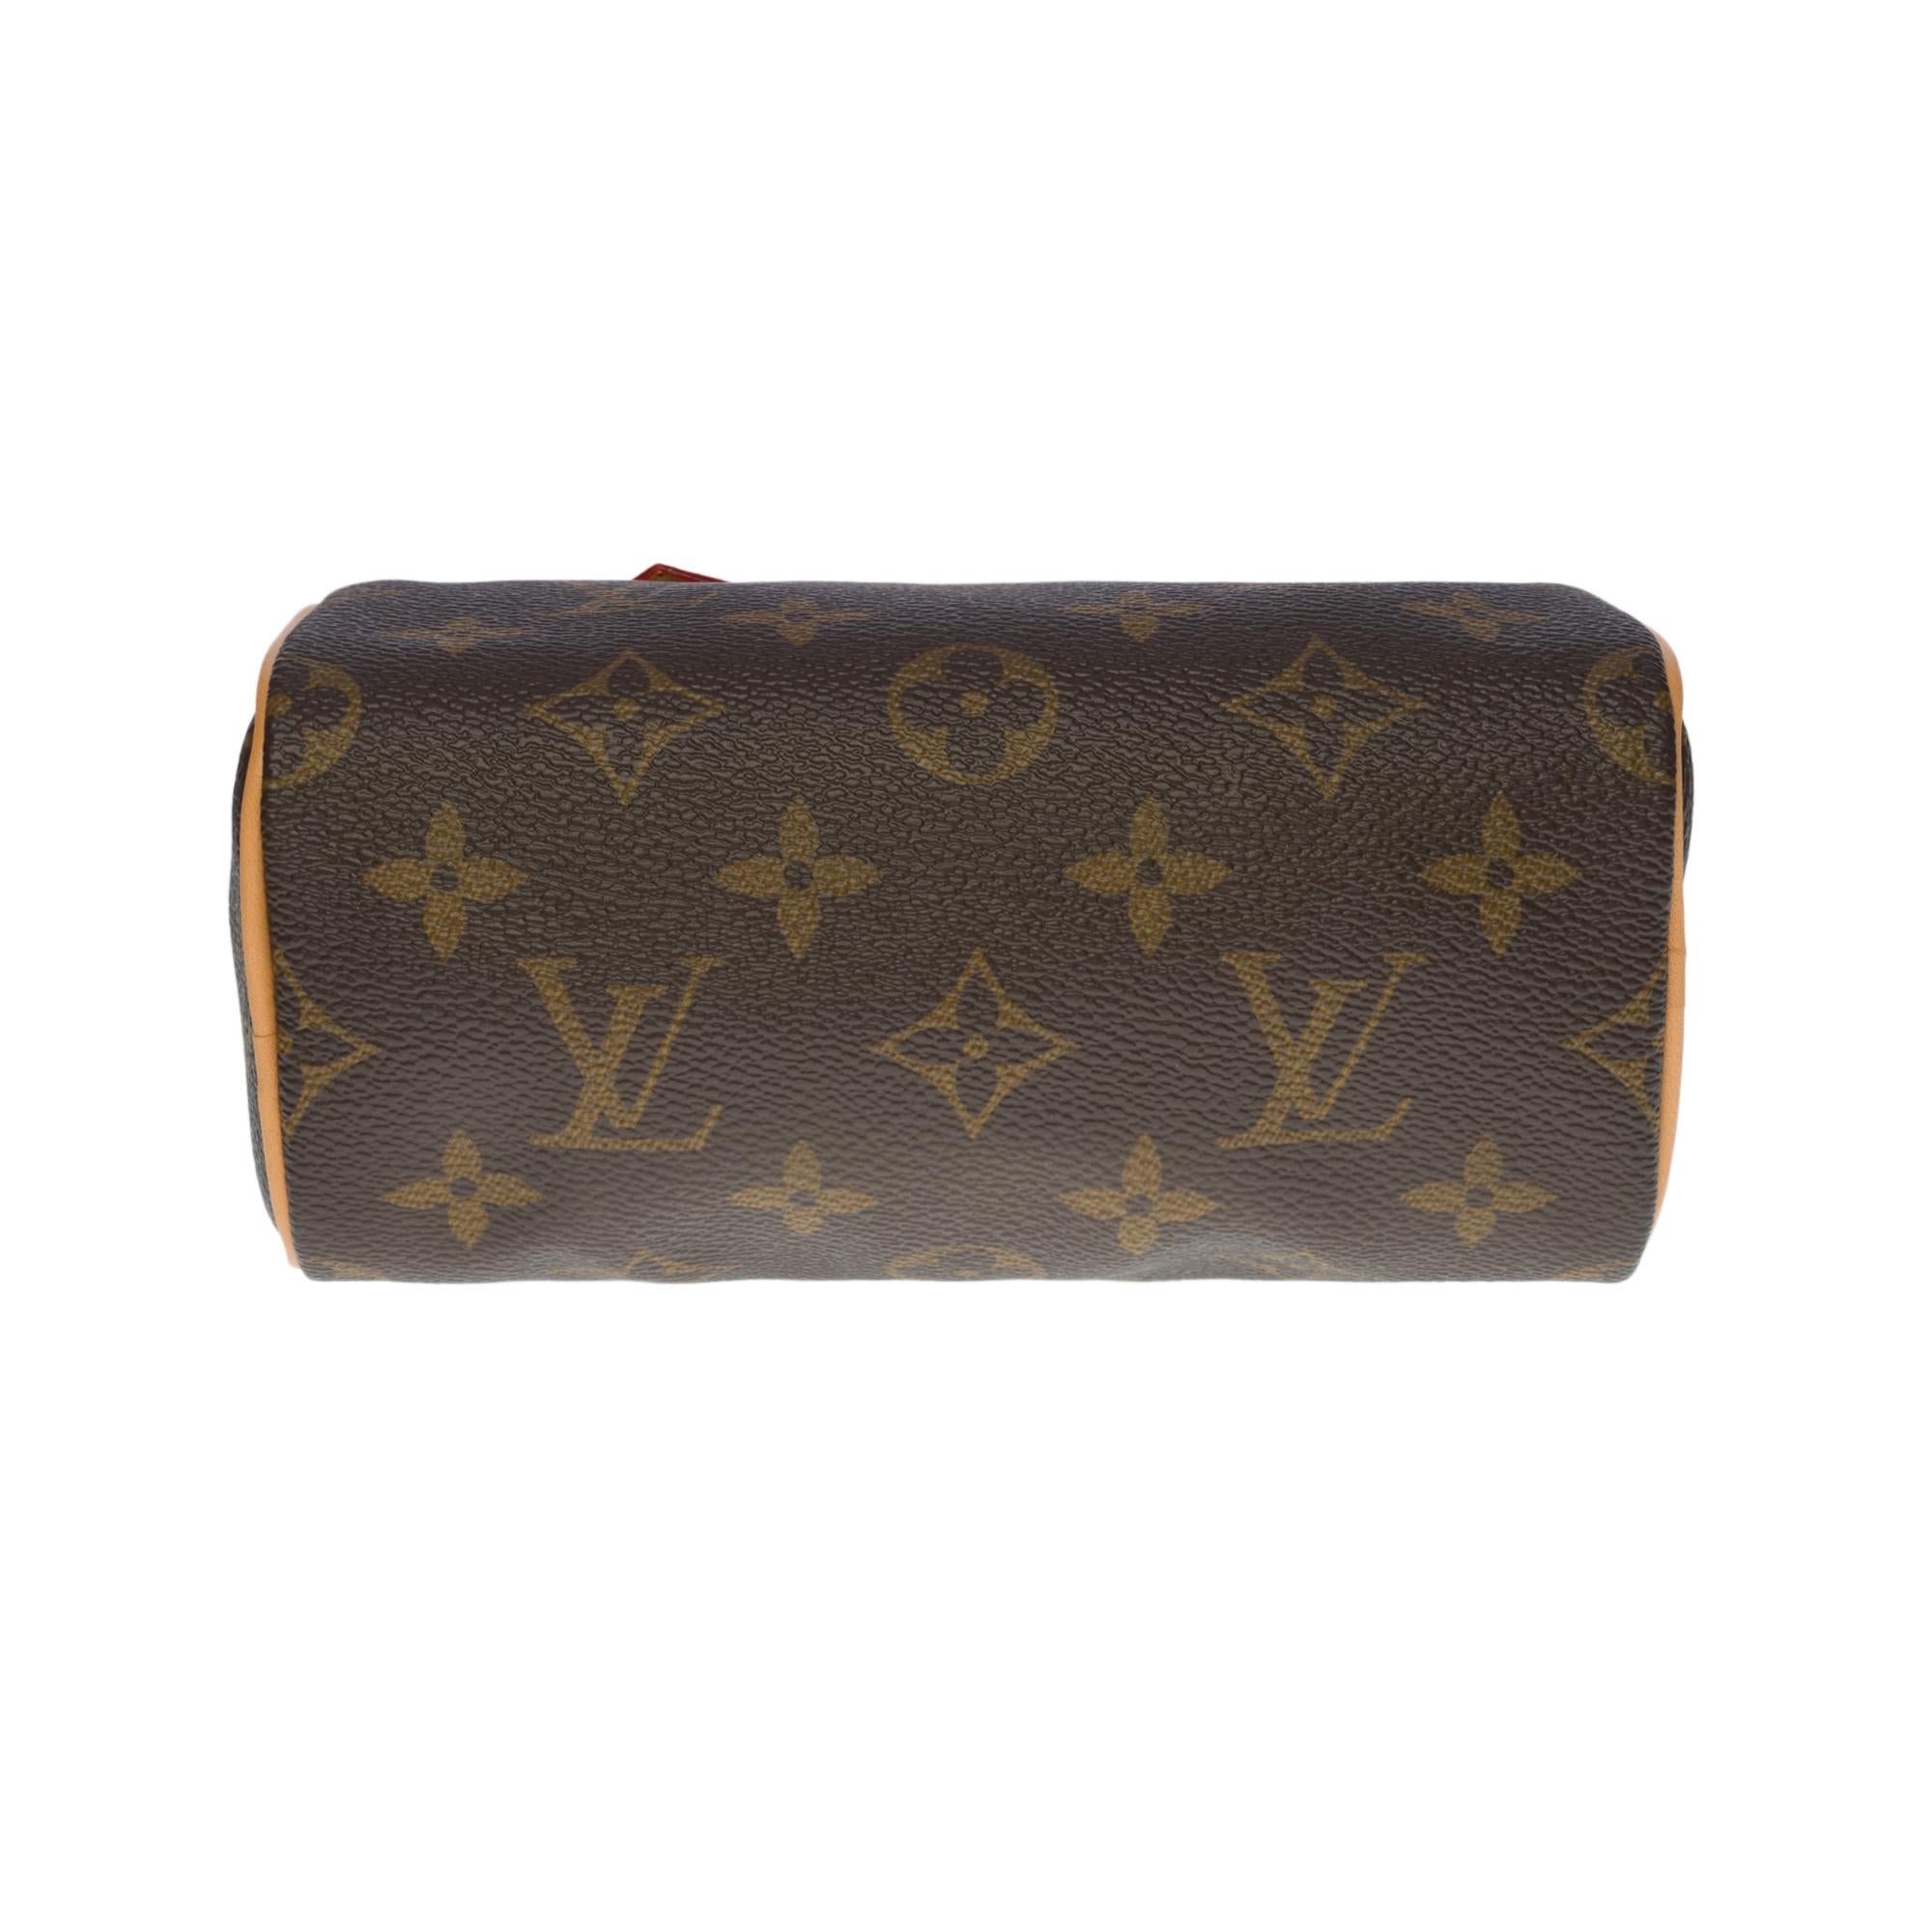 Women's Brand New - Rare Louis Vuitton Nano Speedy handbag strap in brown canvas